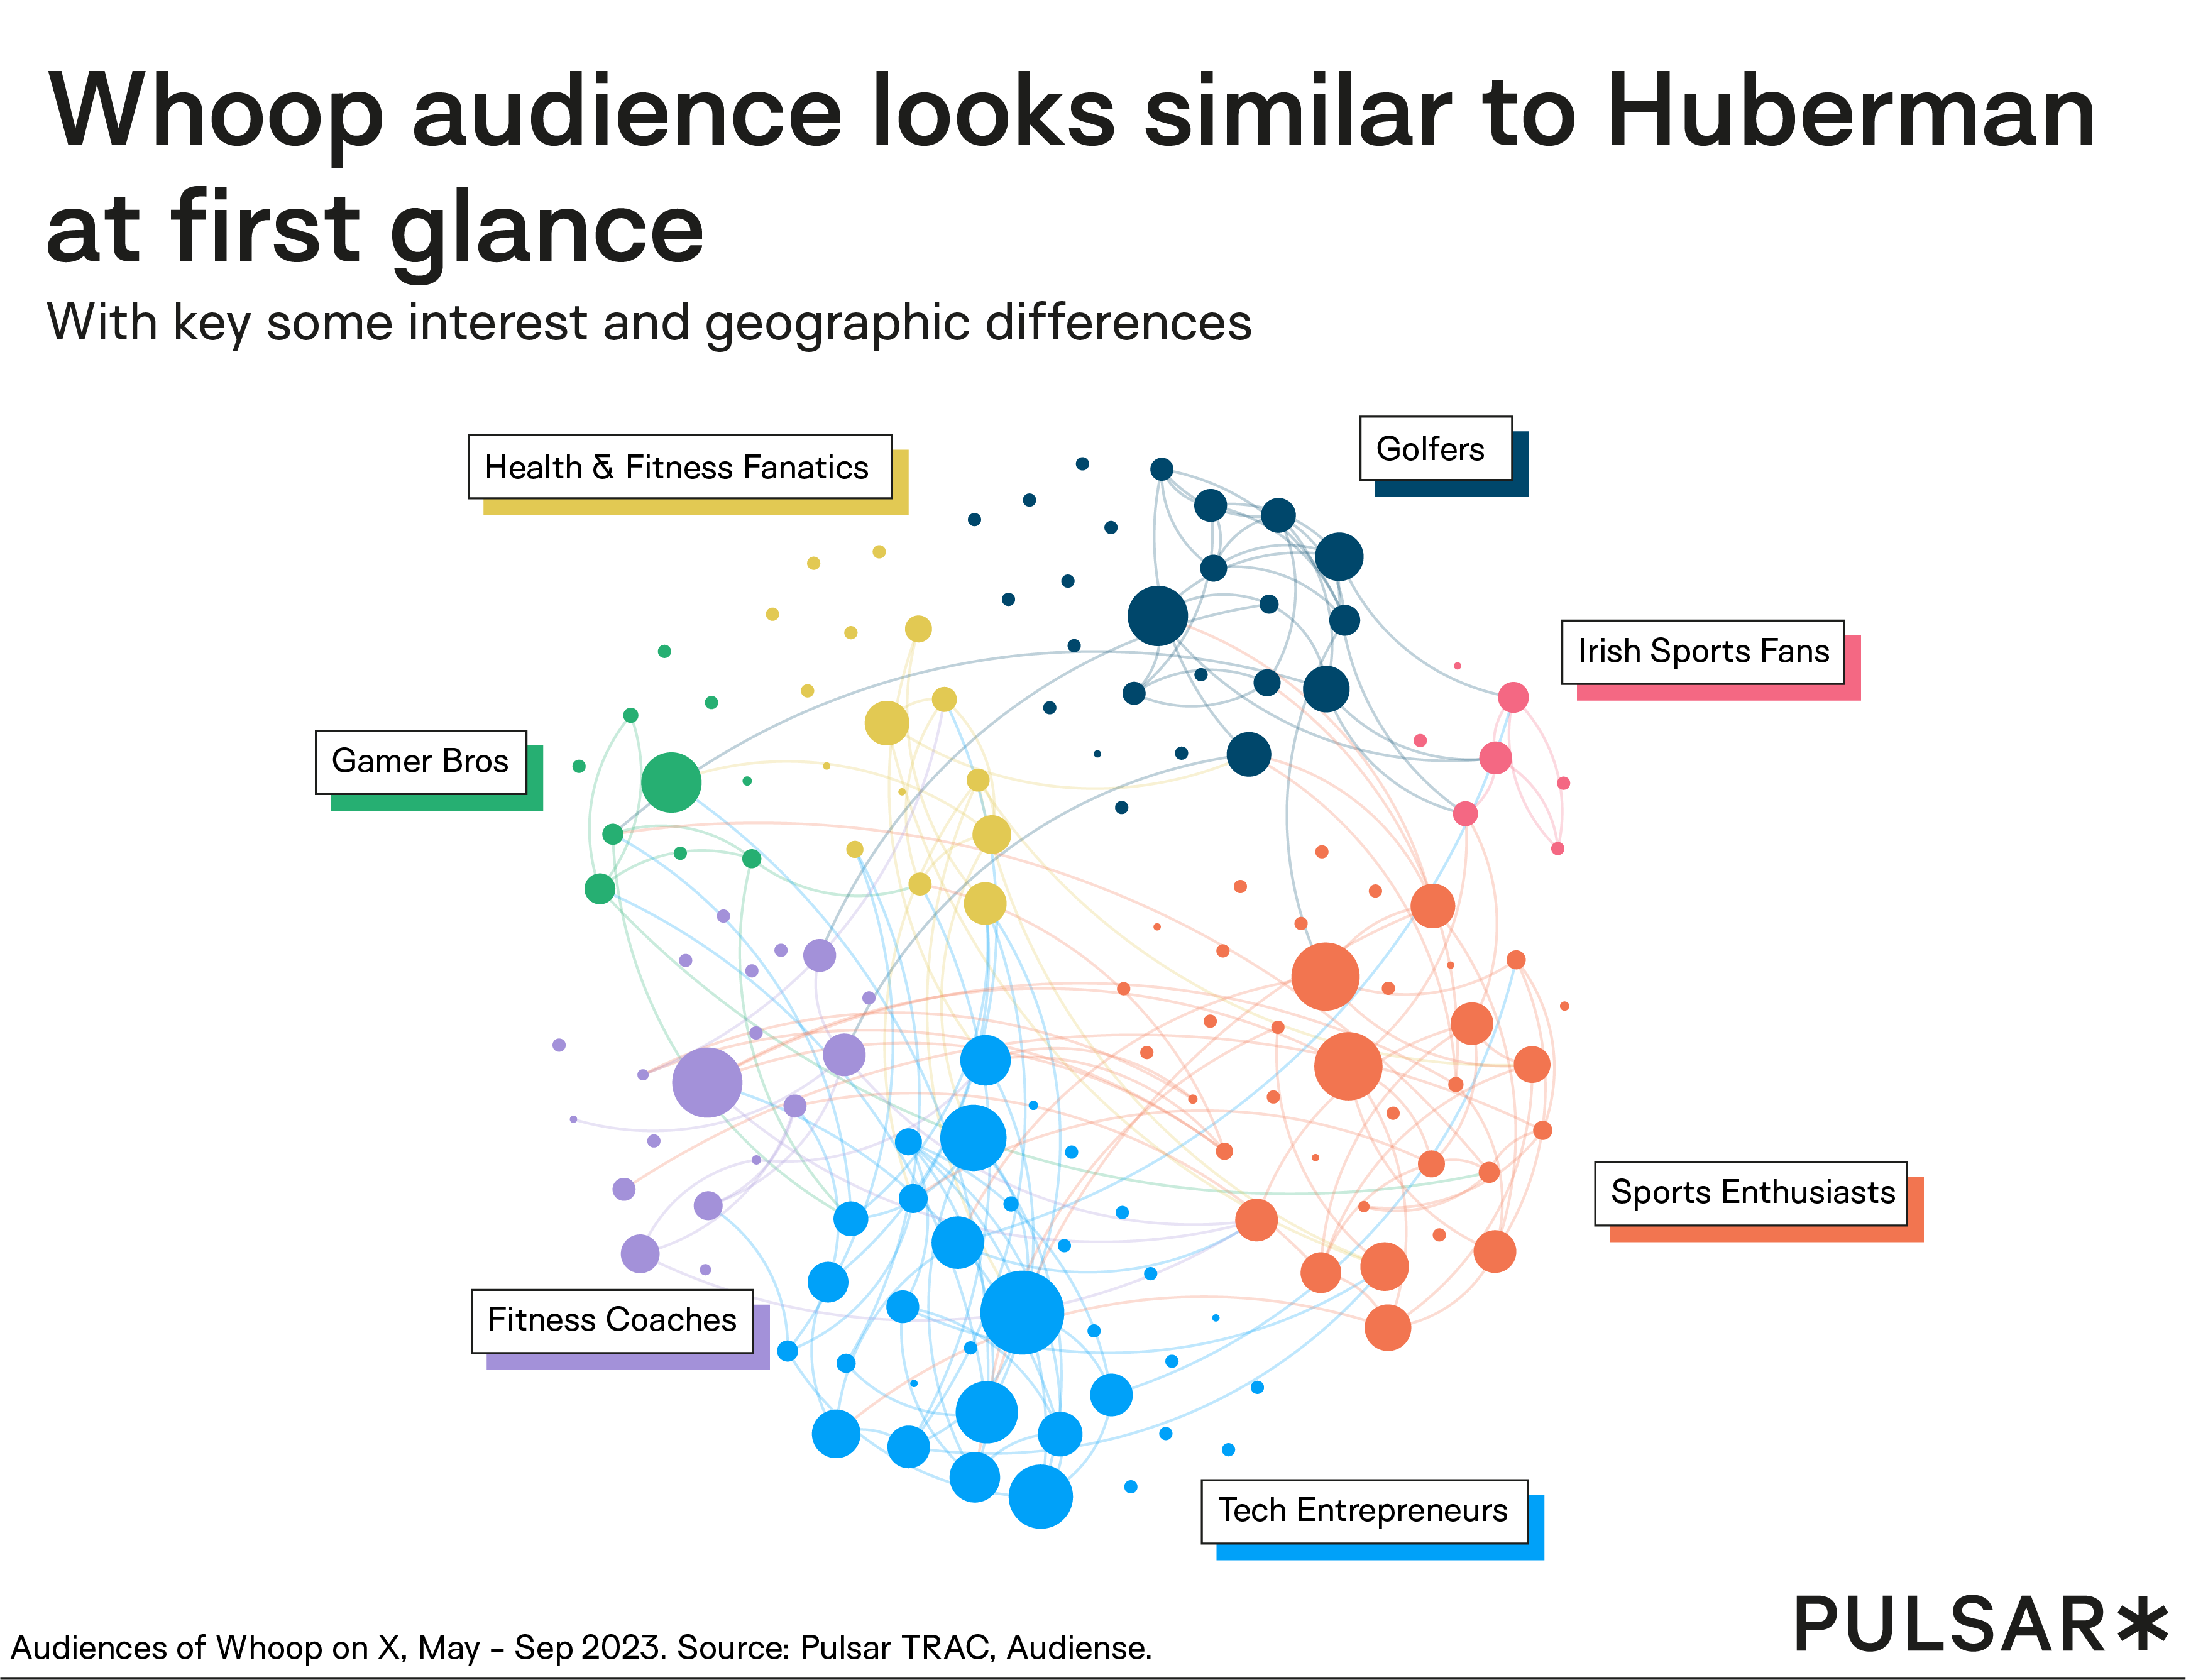 Whoop audiences in interconnected chart